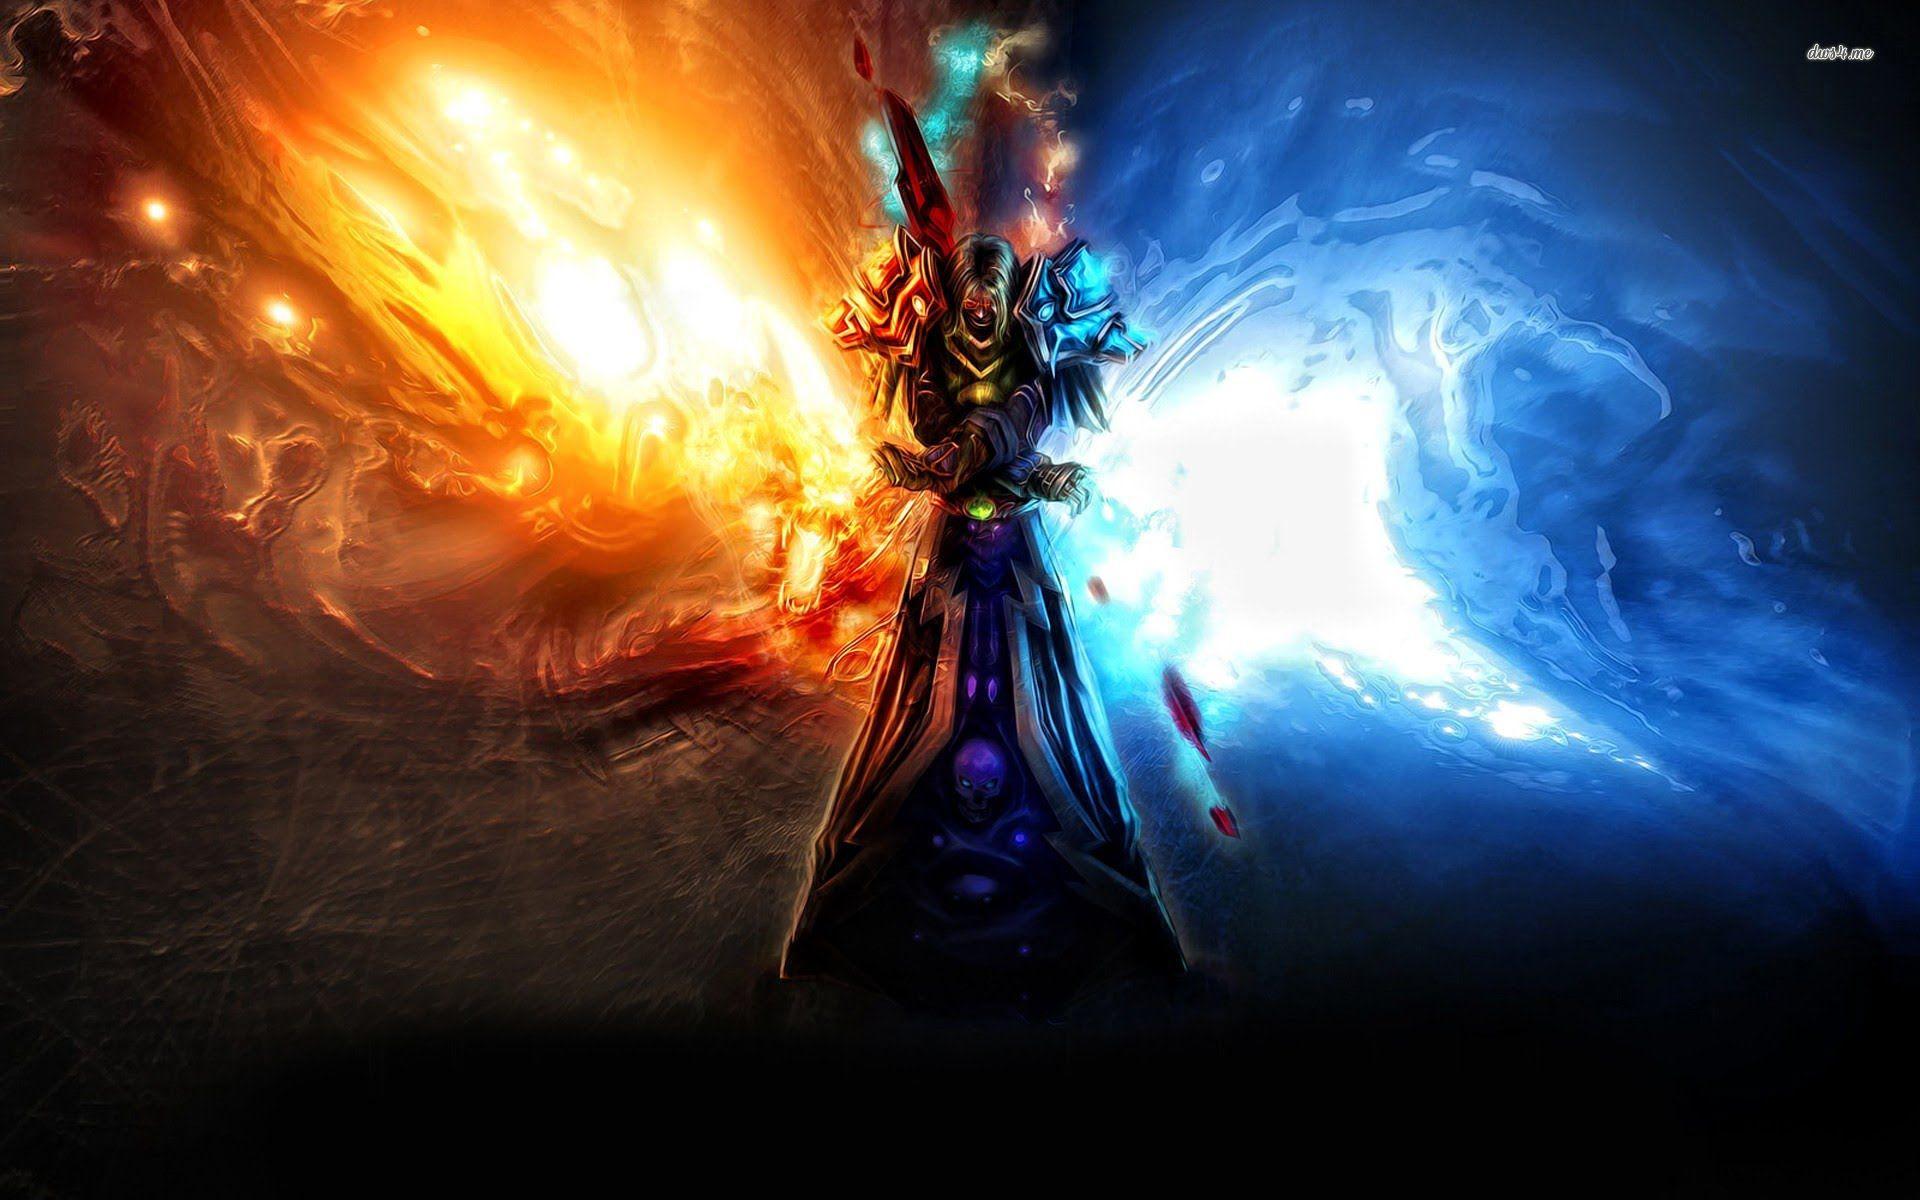 World of Warcraft Mage: How to unlock hidden artifact weapon